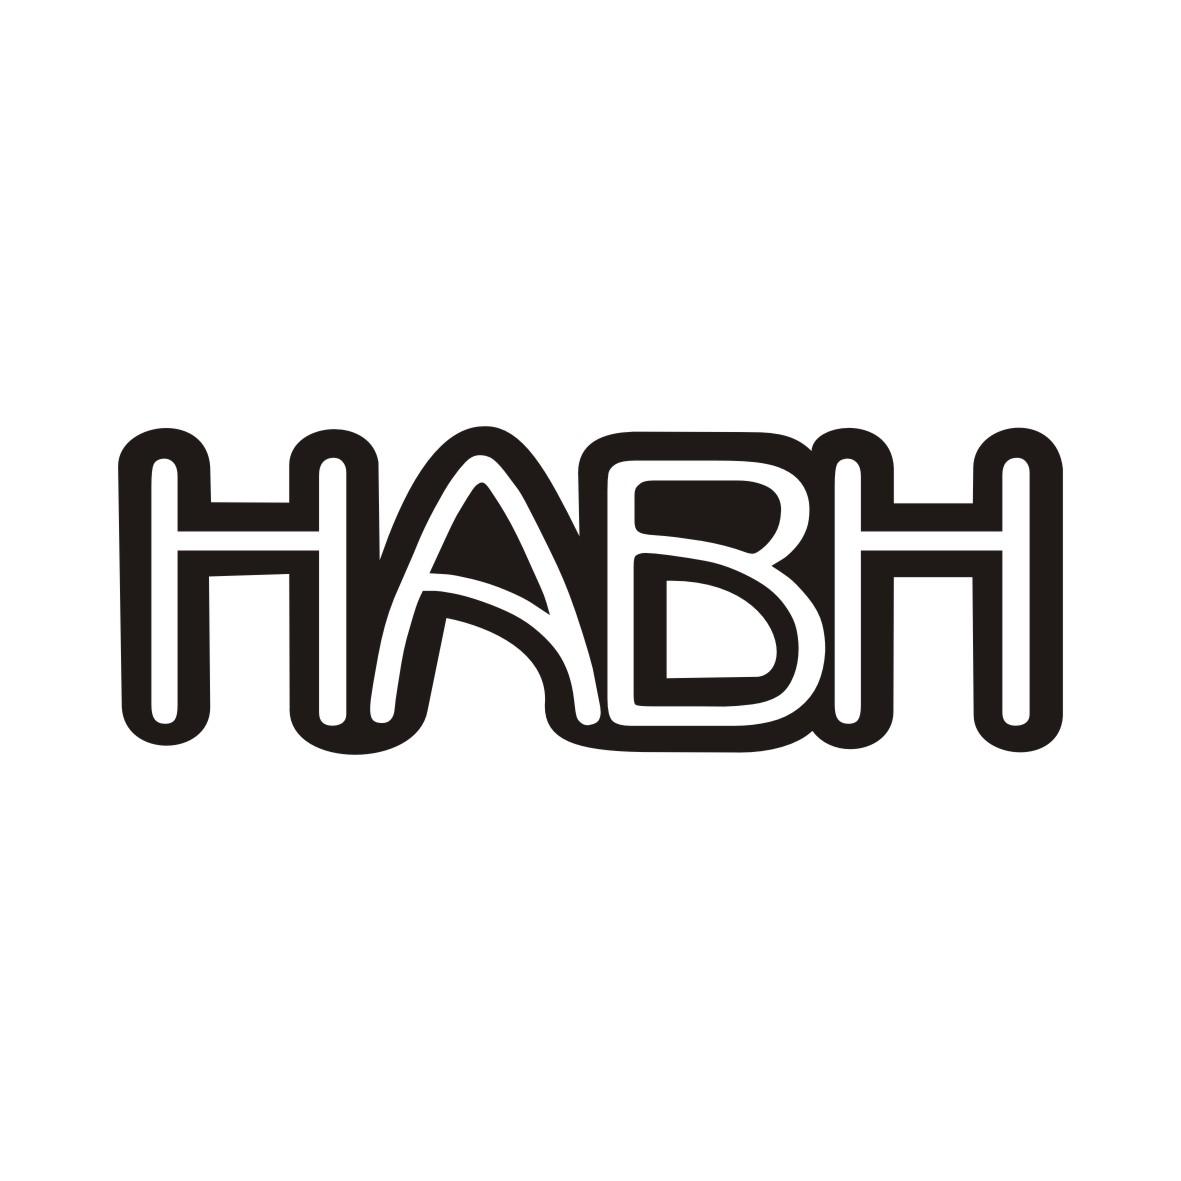 HABH商标转让